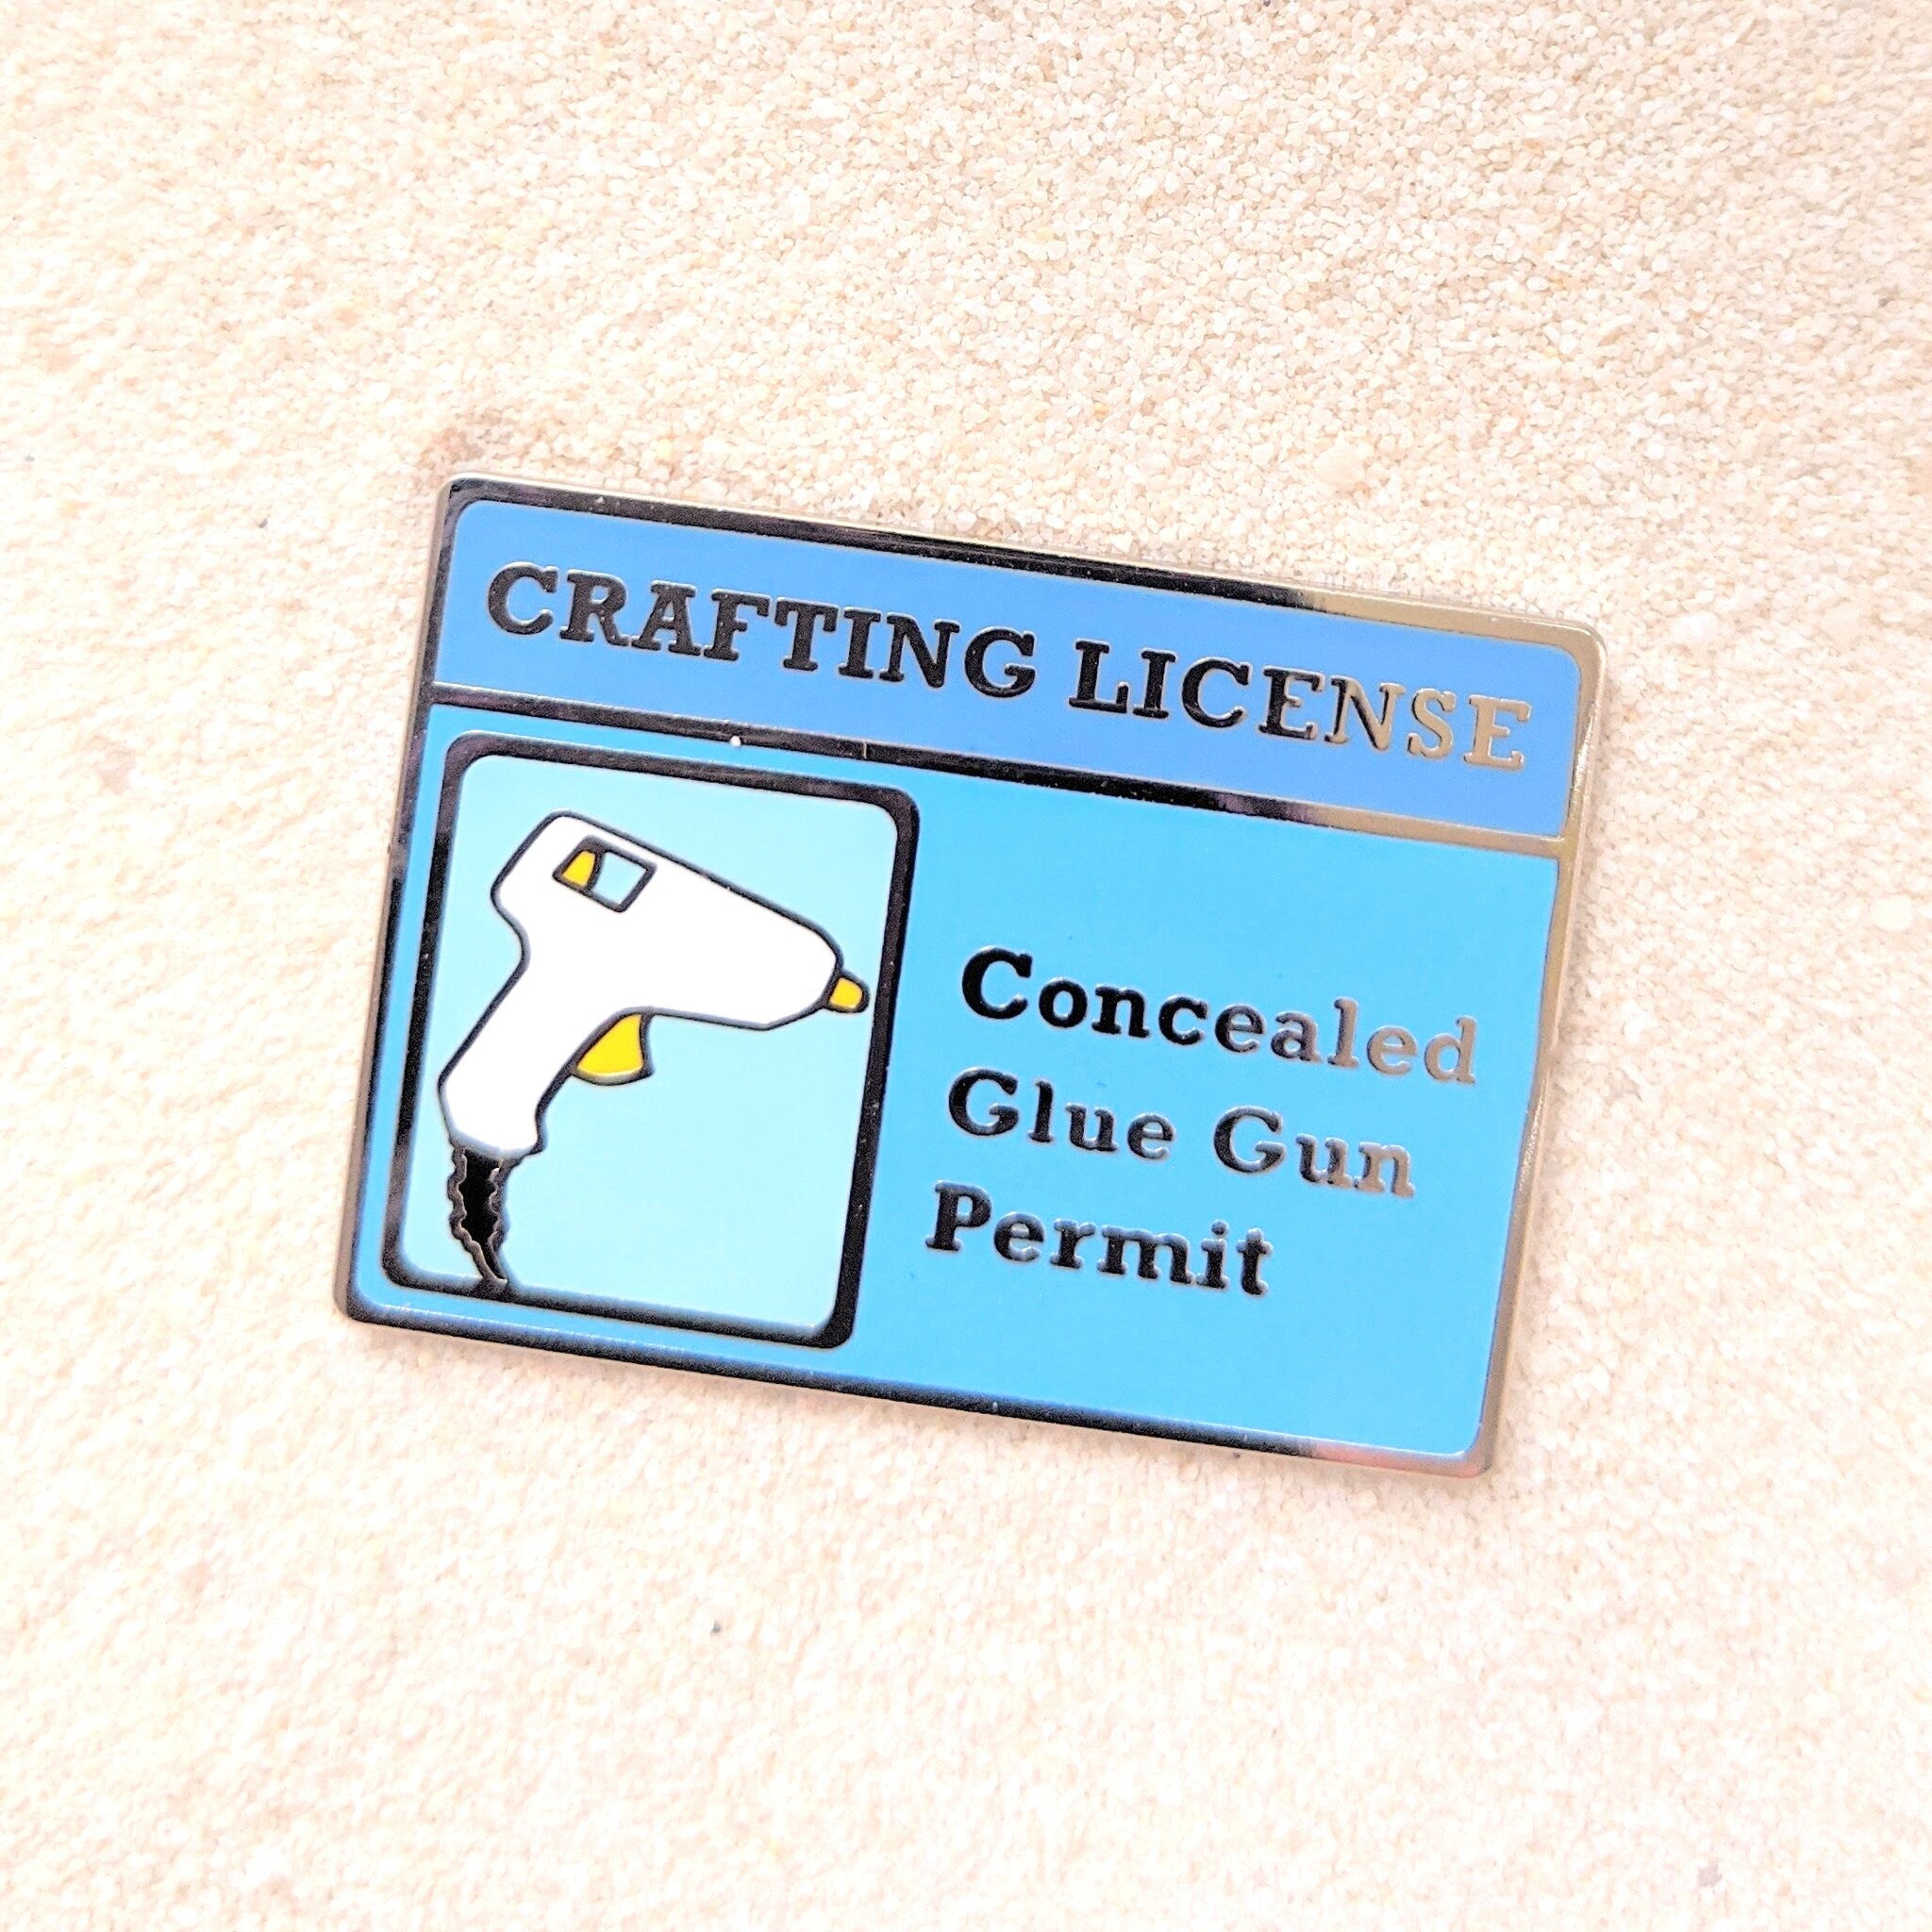 Crafting License Concealed Glue Gun Permit - 1.5" Enamel Pin Lapel Metal Badge